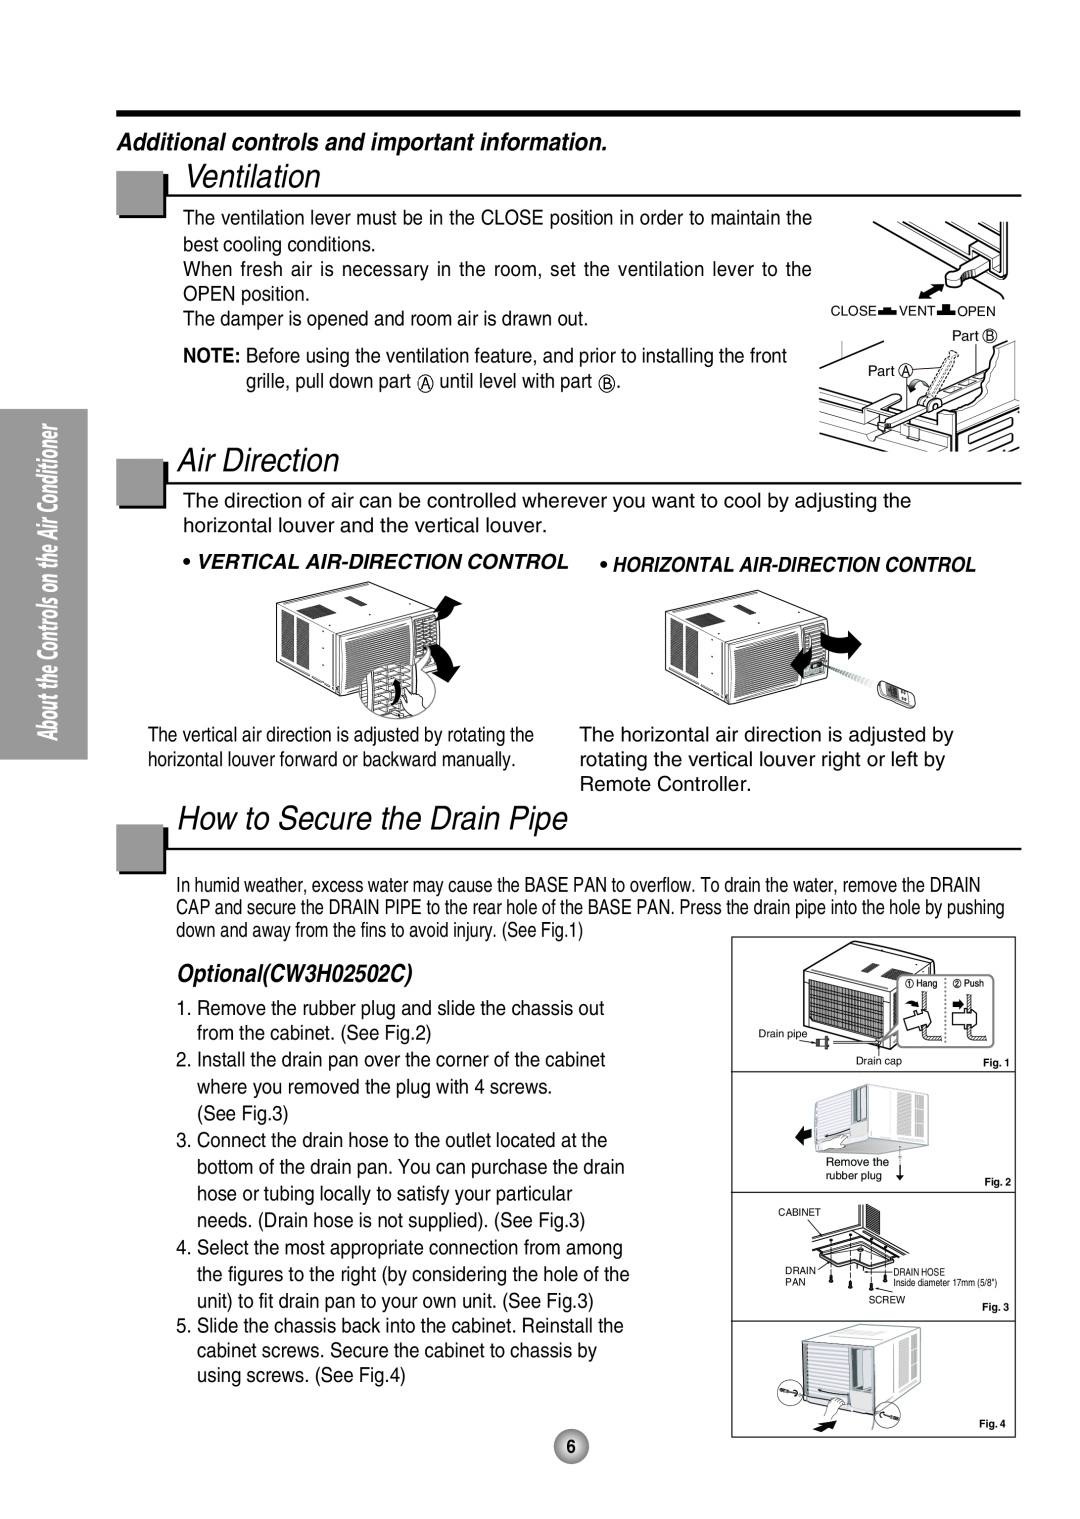 Panasonic CW-XC184HU, CW-XC244HU manual Ventilation, Air Direction, How to Secure the Drain Pipe, OptionalCW3H02502C 